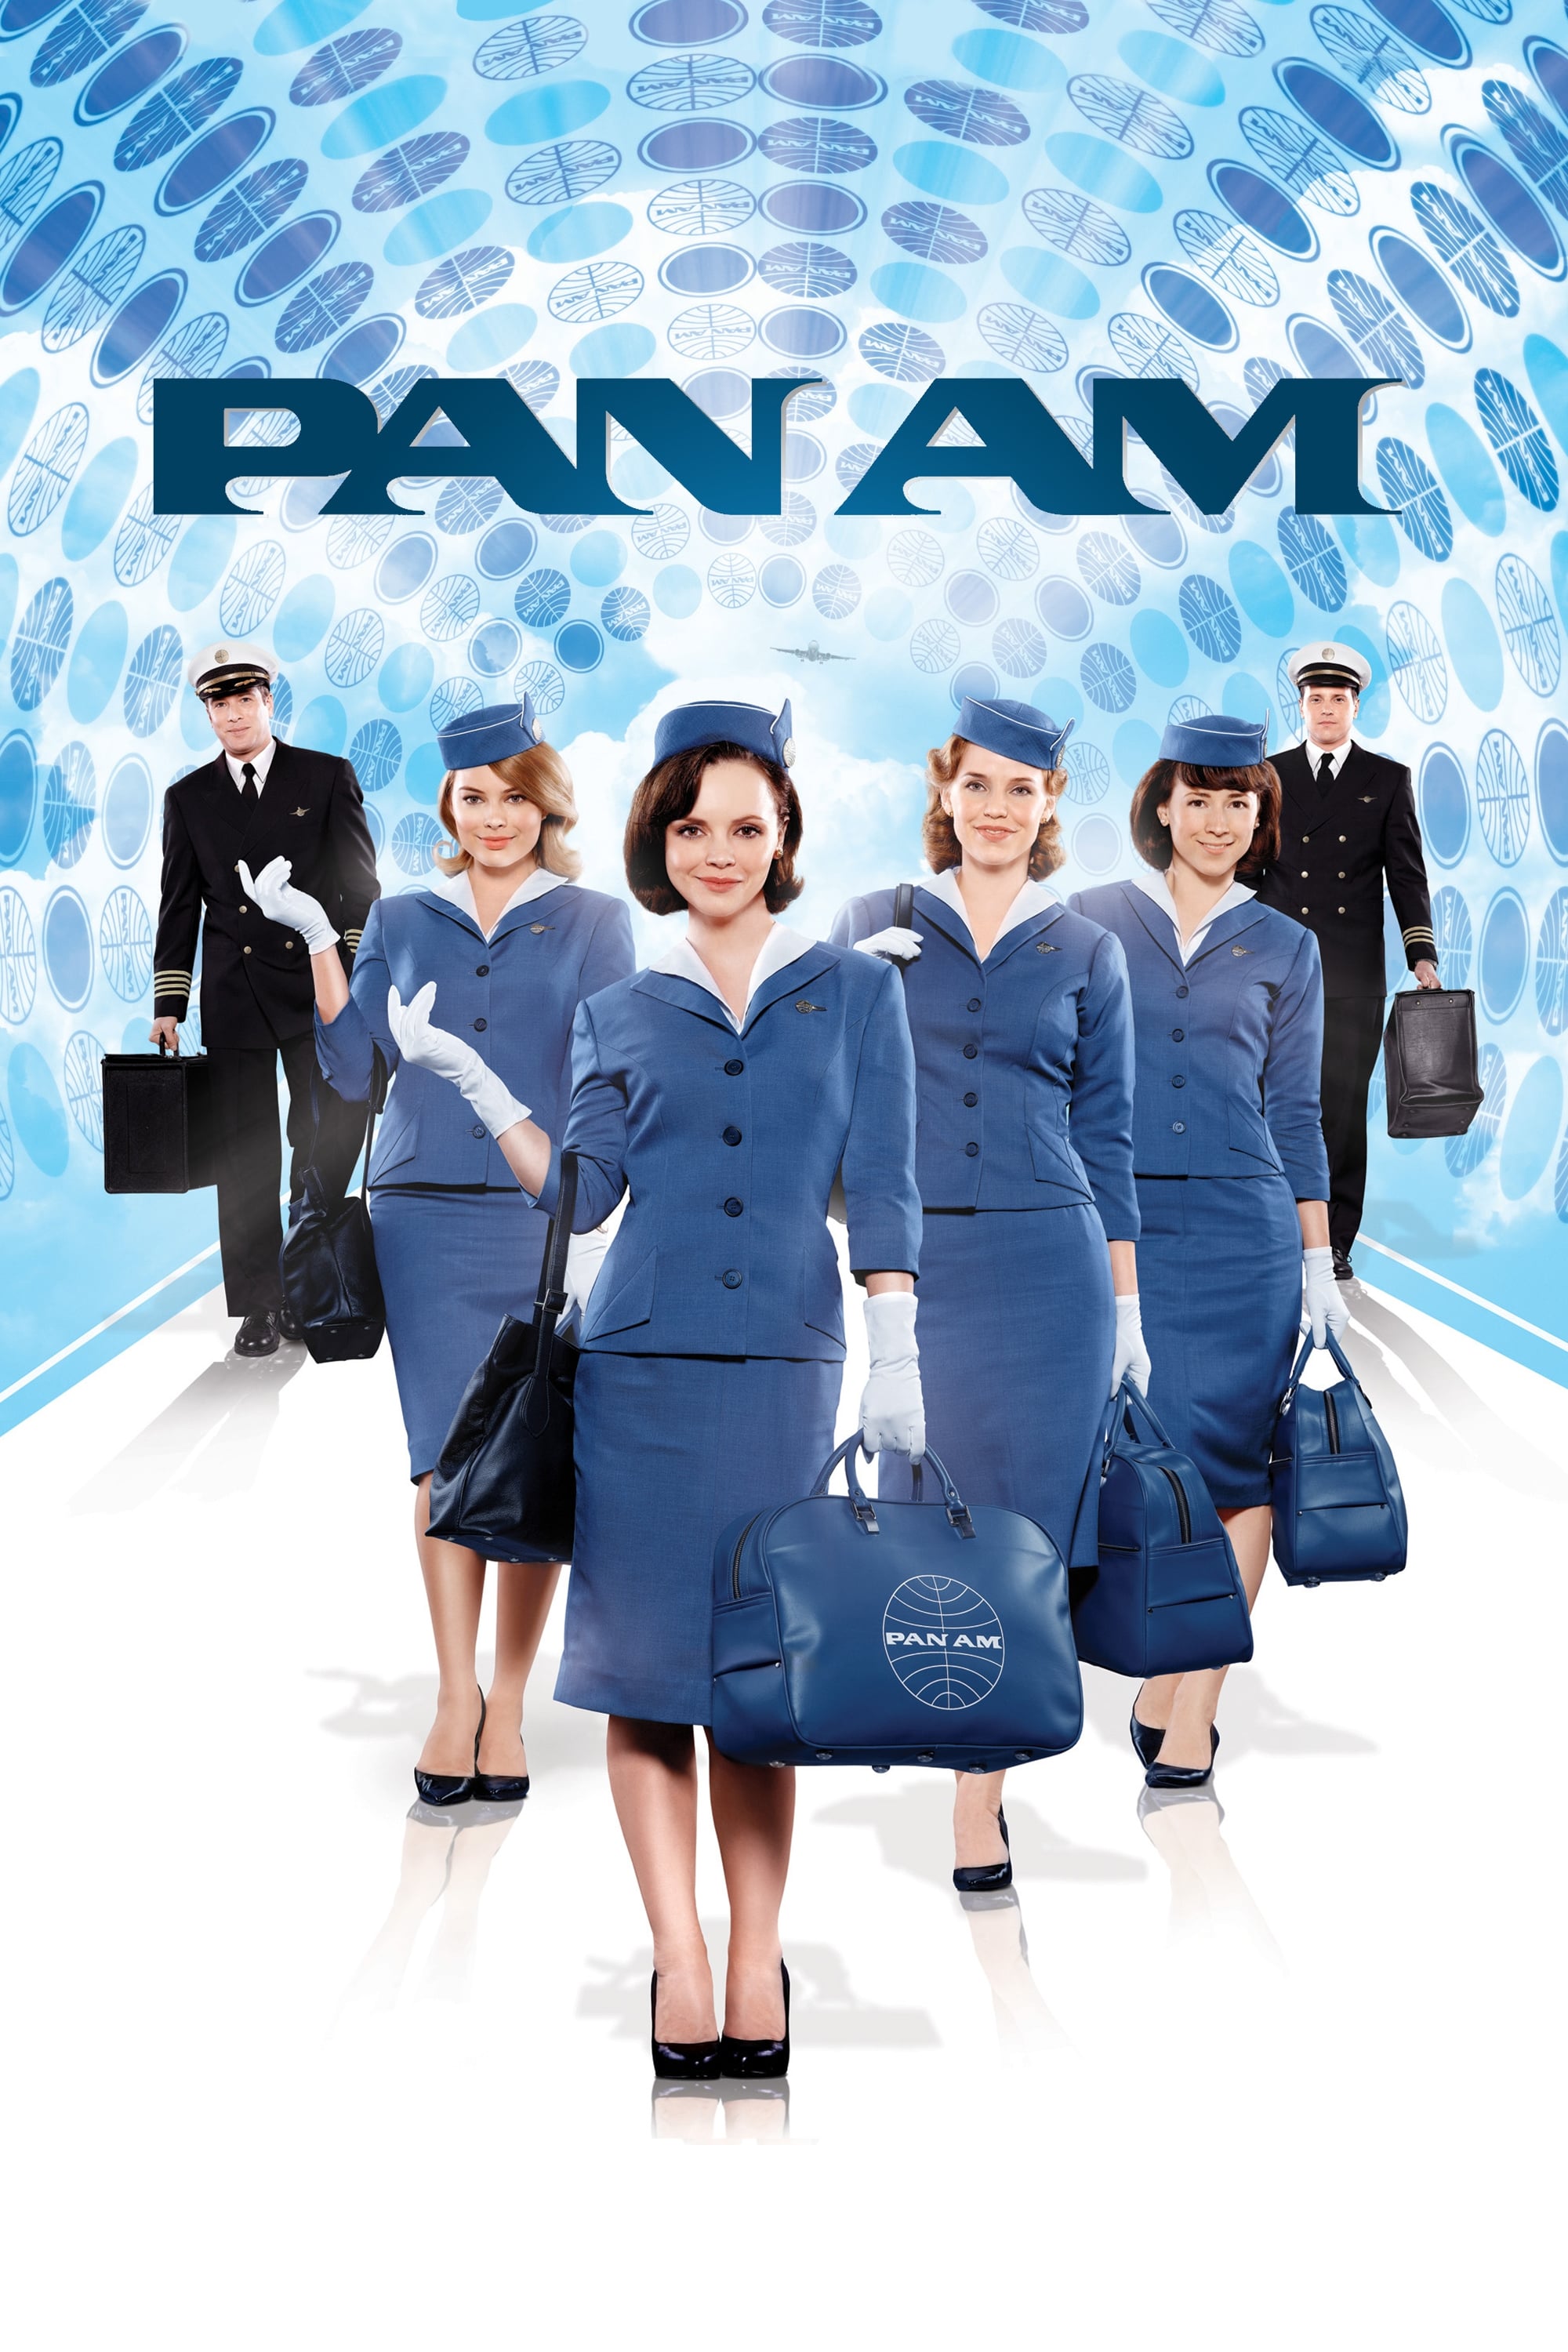 Pan Am TV Shows About Pilot